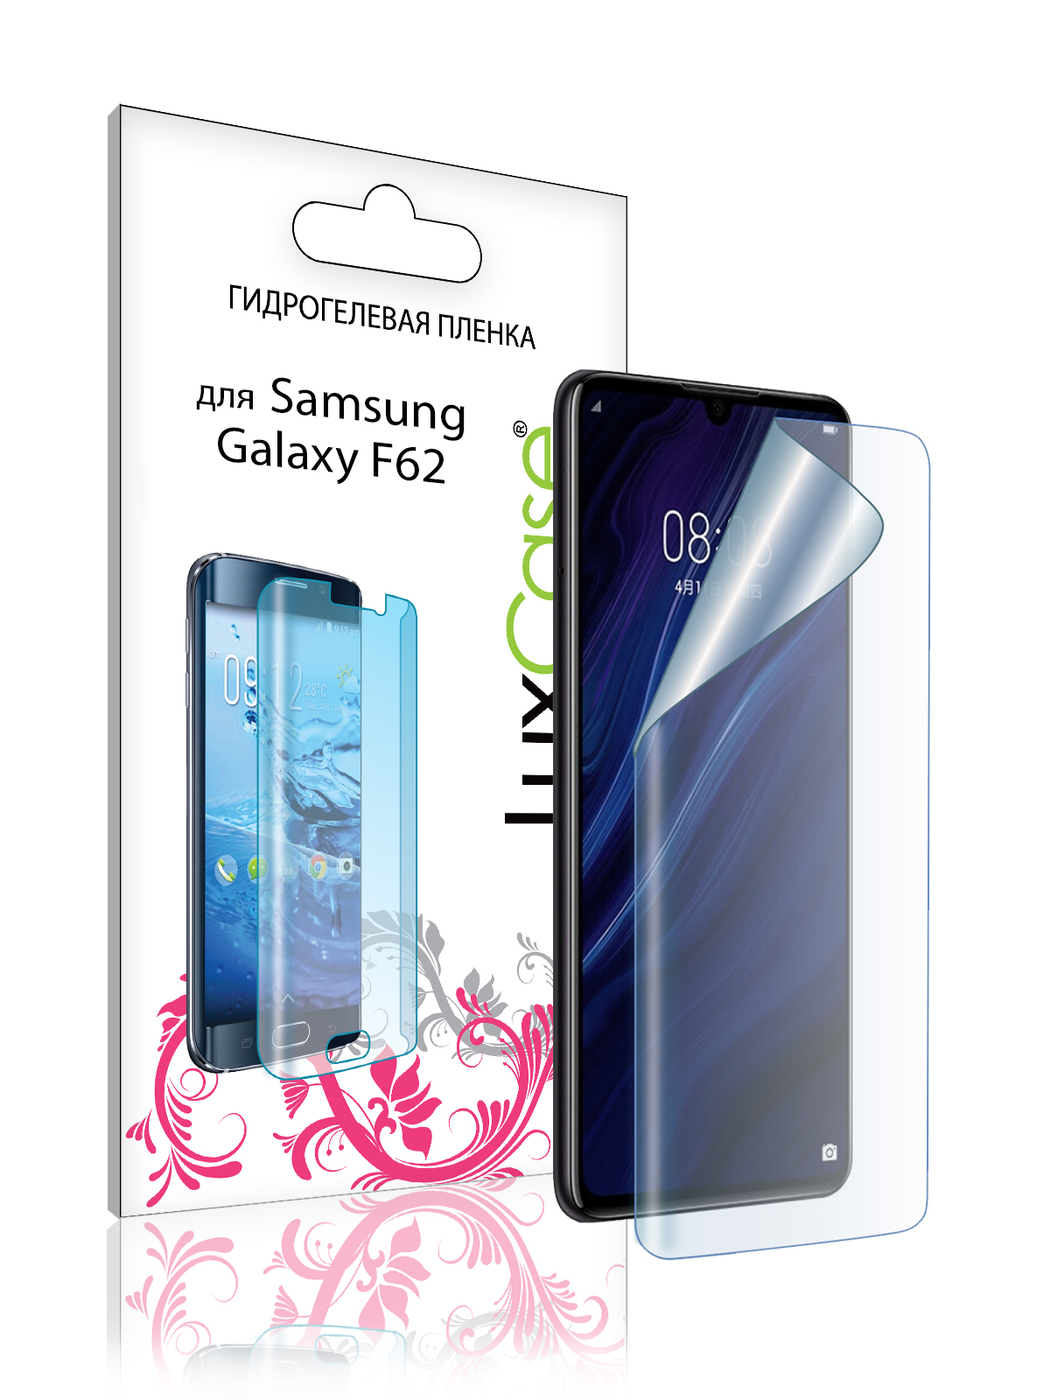 Пленка гидрогелевая LuxCase для Samsung Galaxy F62 0.14mm Front Transparent 86177 гидрогелевая пленка luxcase для samsung galaxy f62 0 14mm front and back transparent 86179